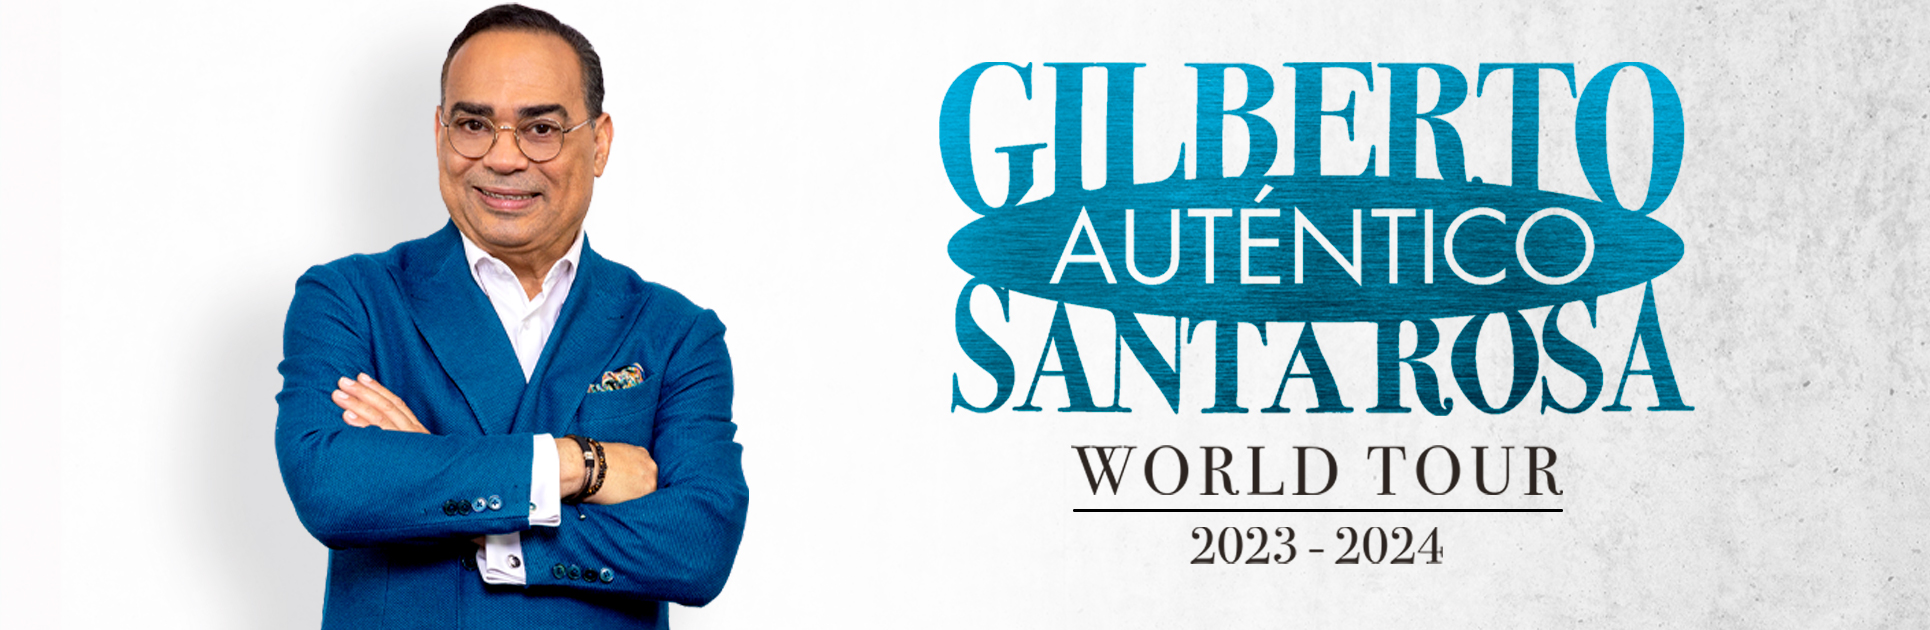 Gilberto Santa Rosa